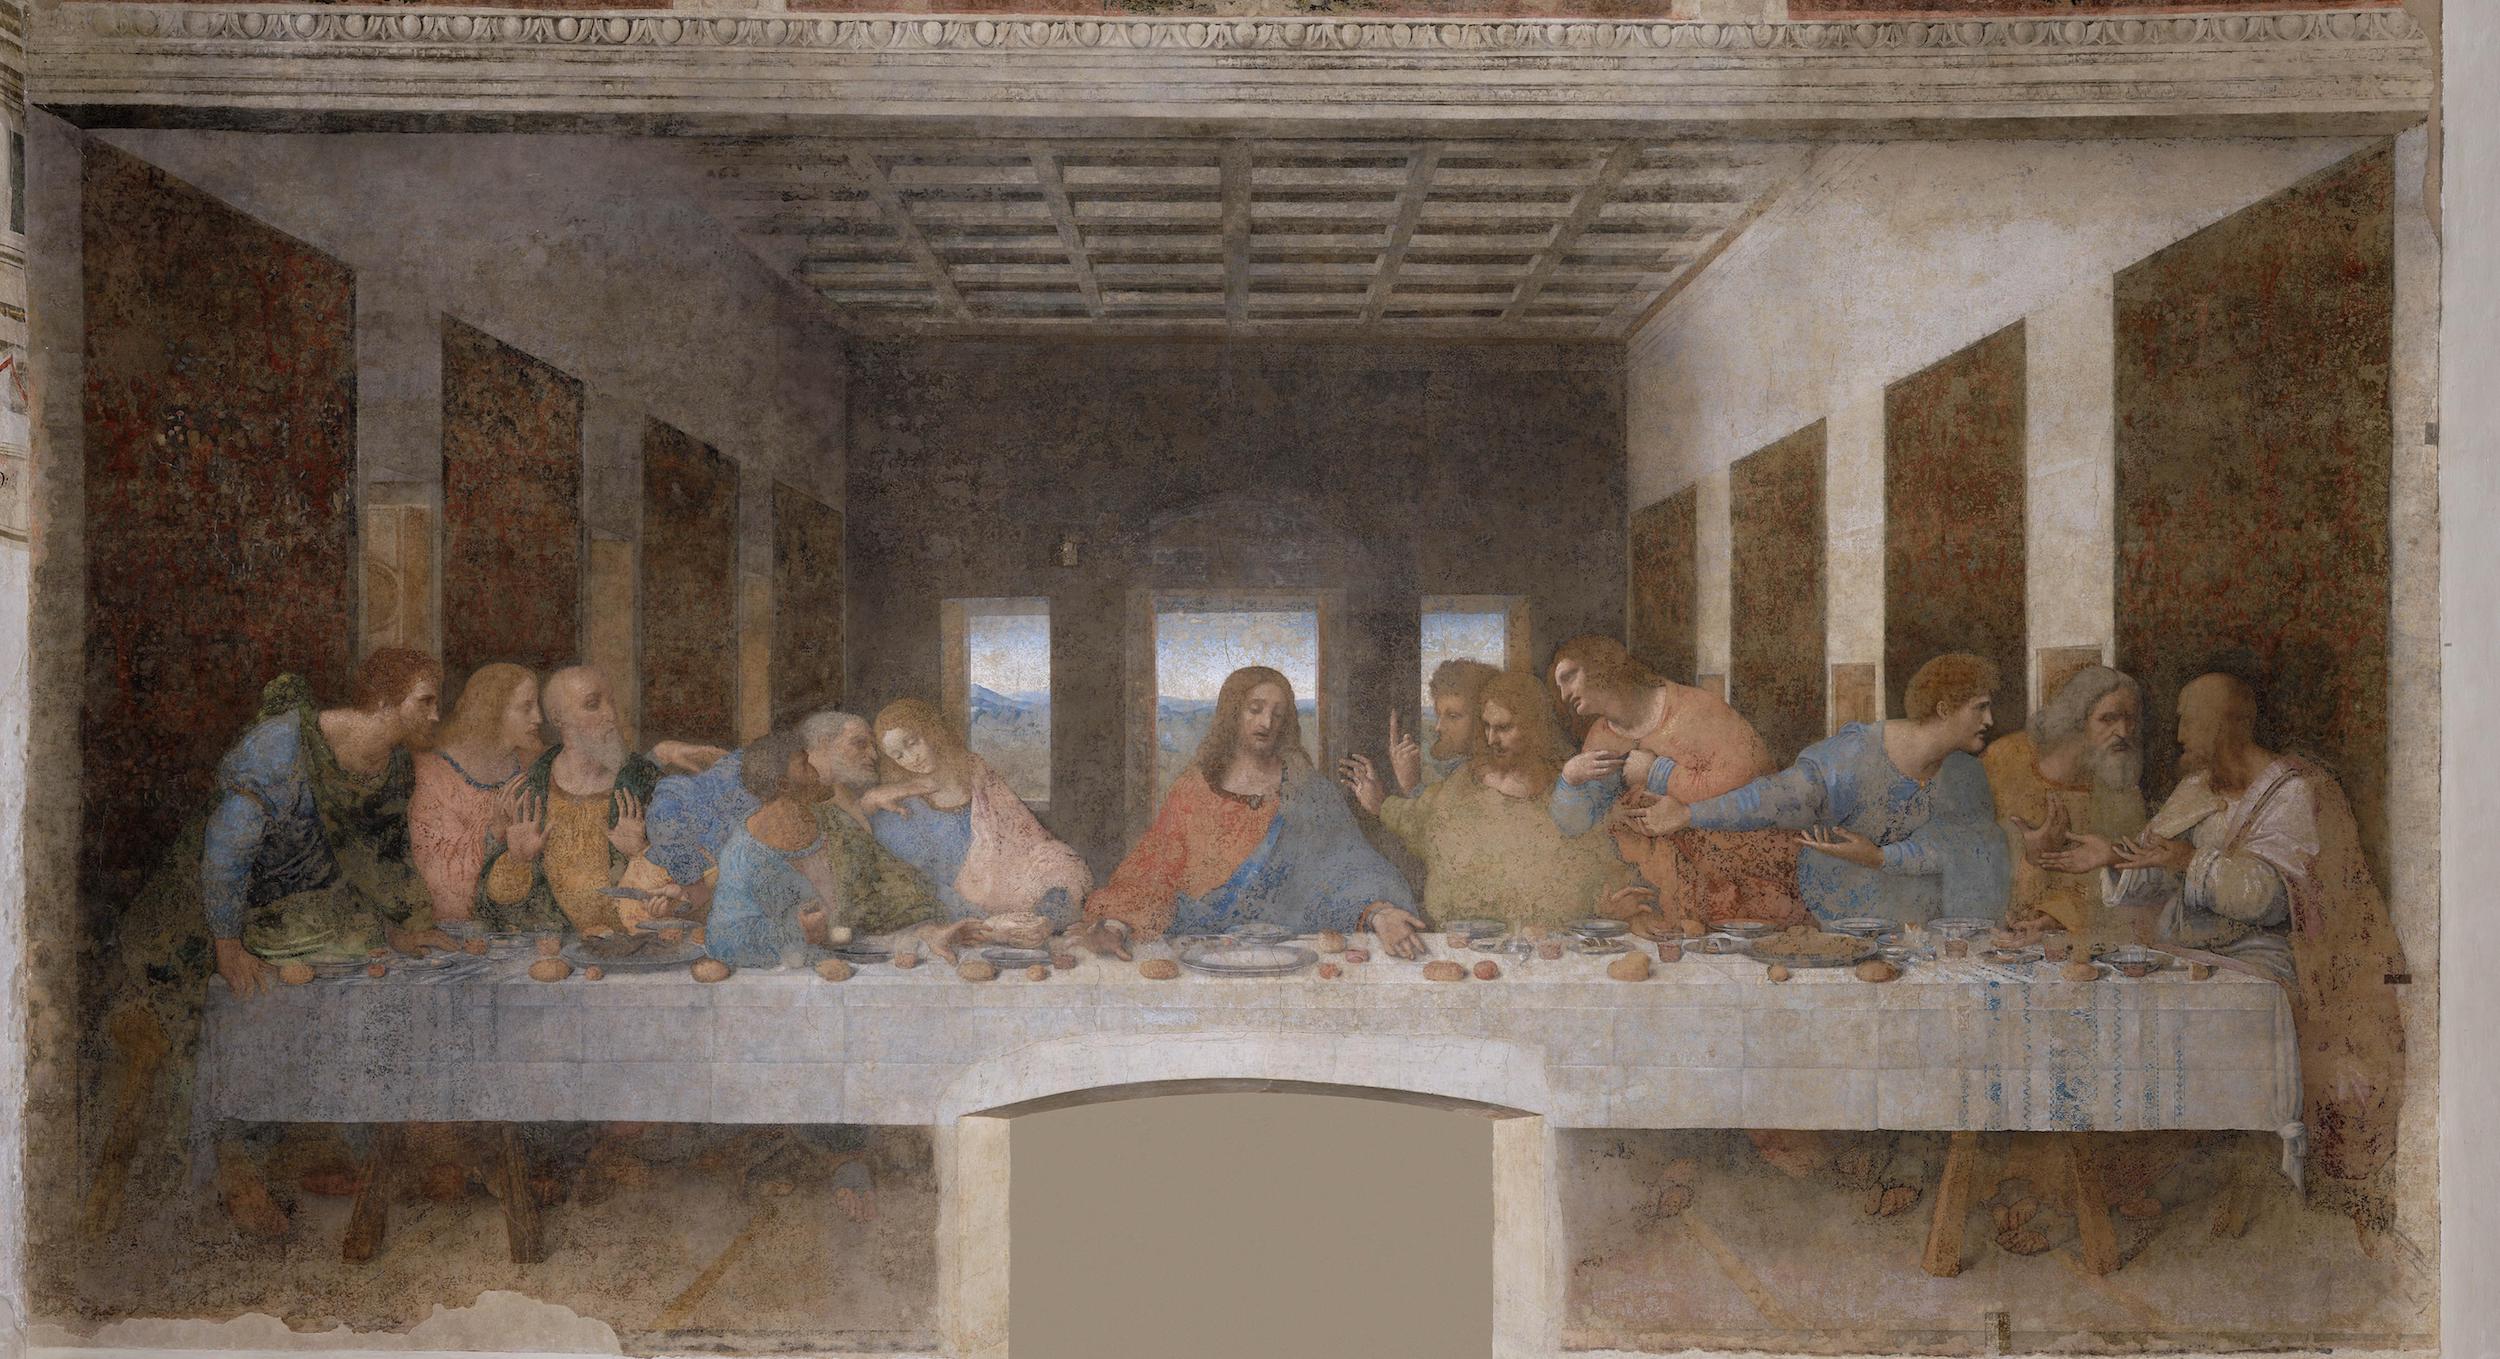 Das letzte Abendmahl by Leonardo da Vinci - 1495-1498 - 460 x 880 cm Santa Maria delle Grazie